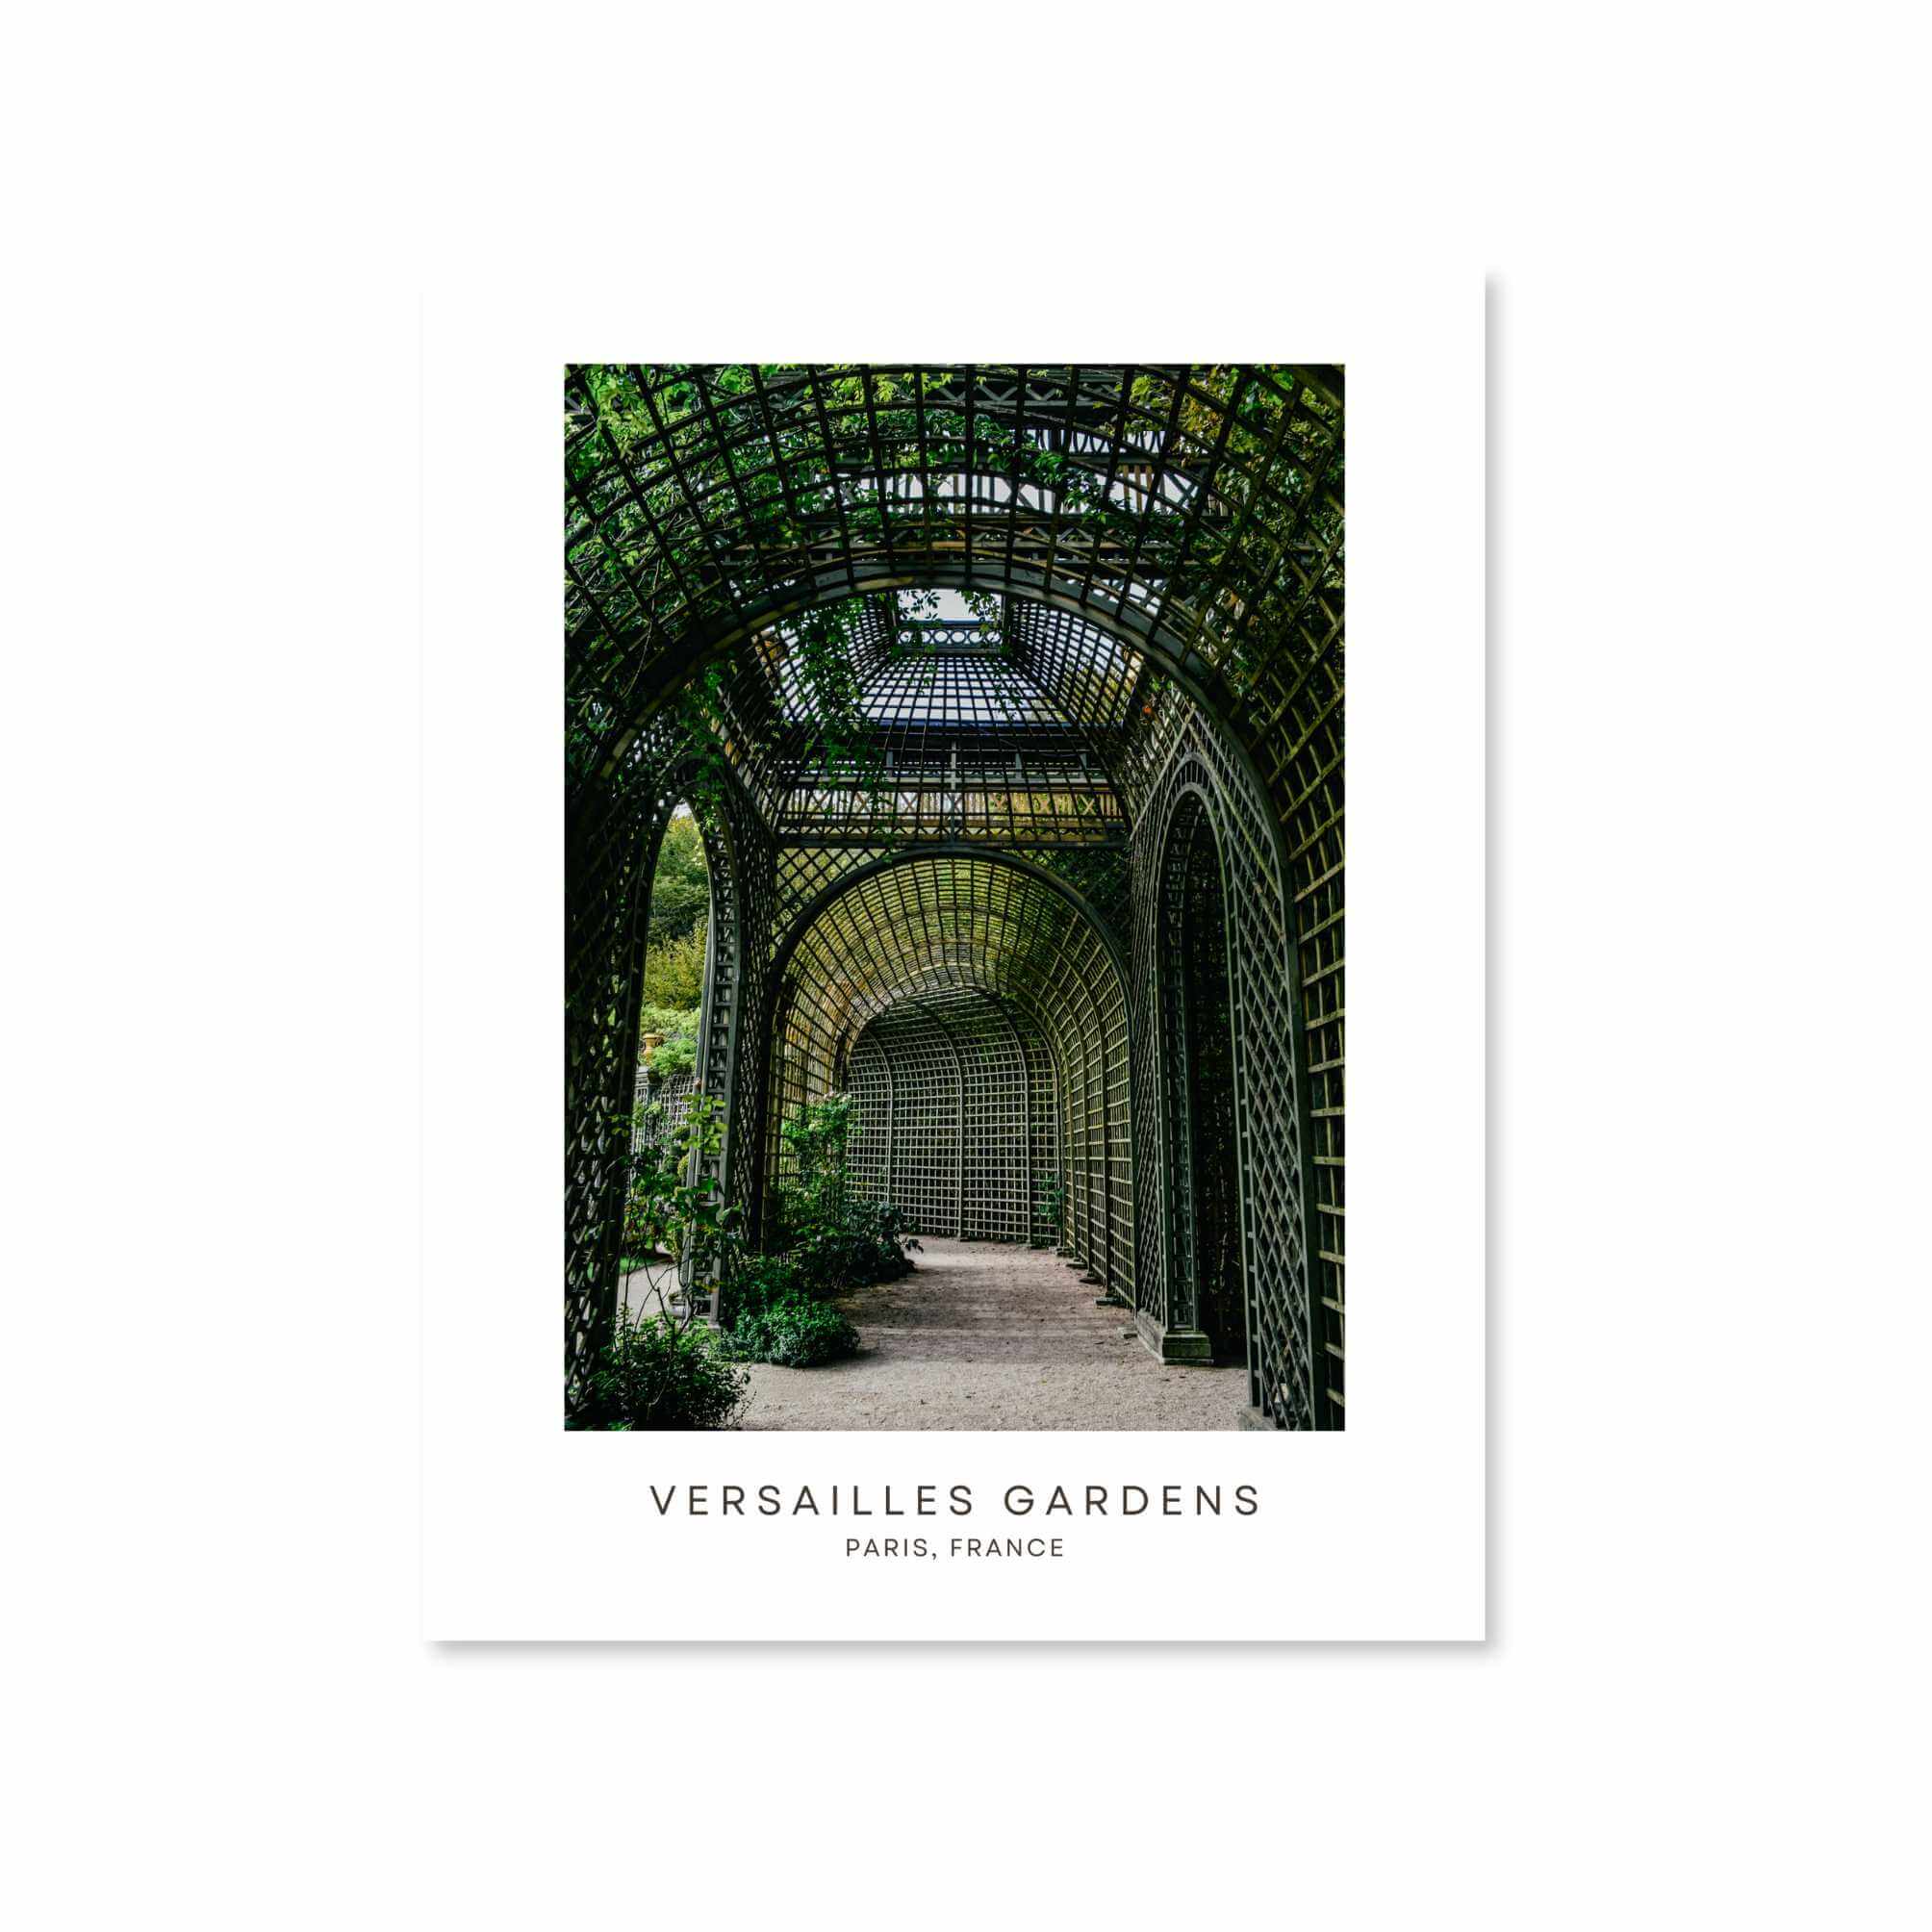 Versailles Gardens Postcard